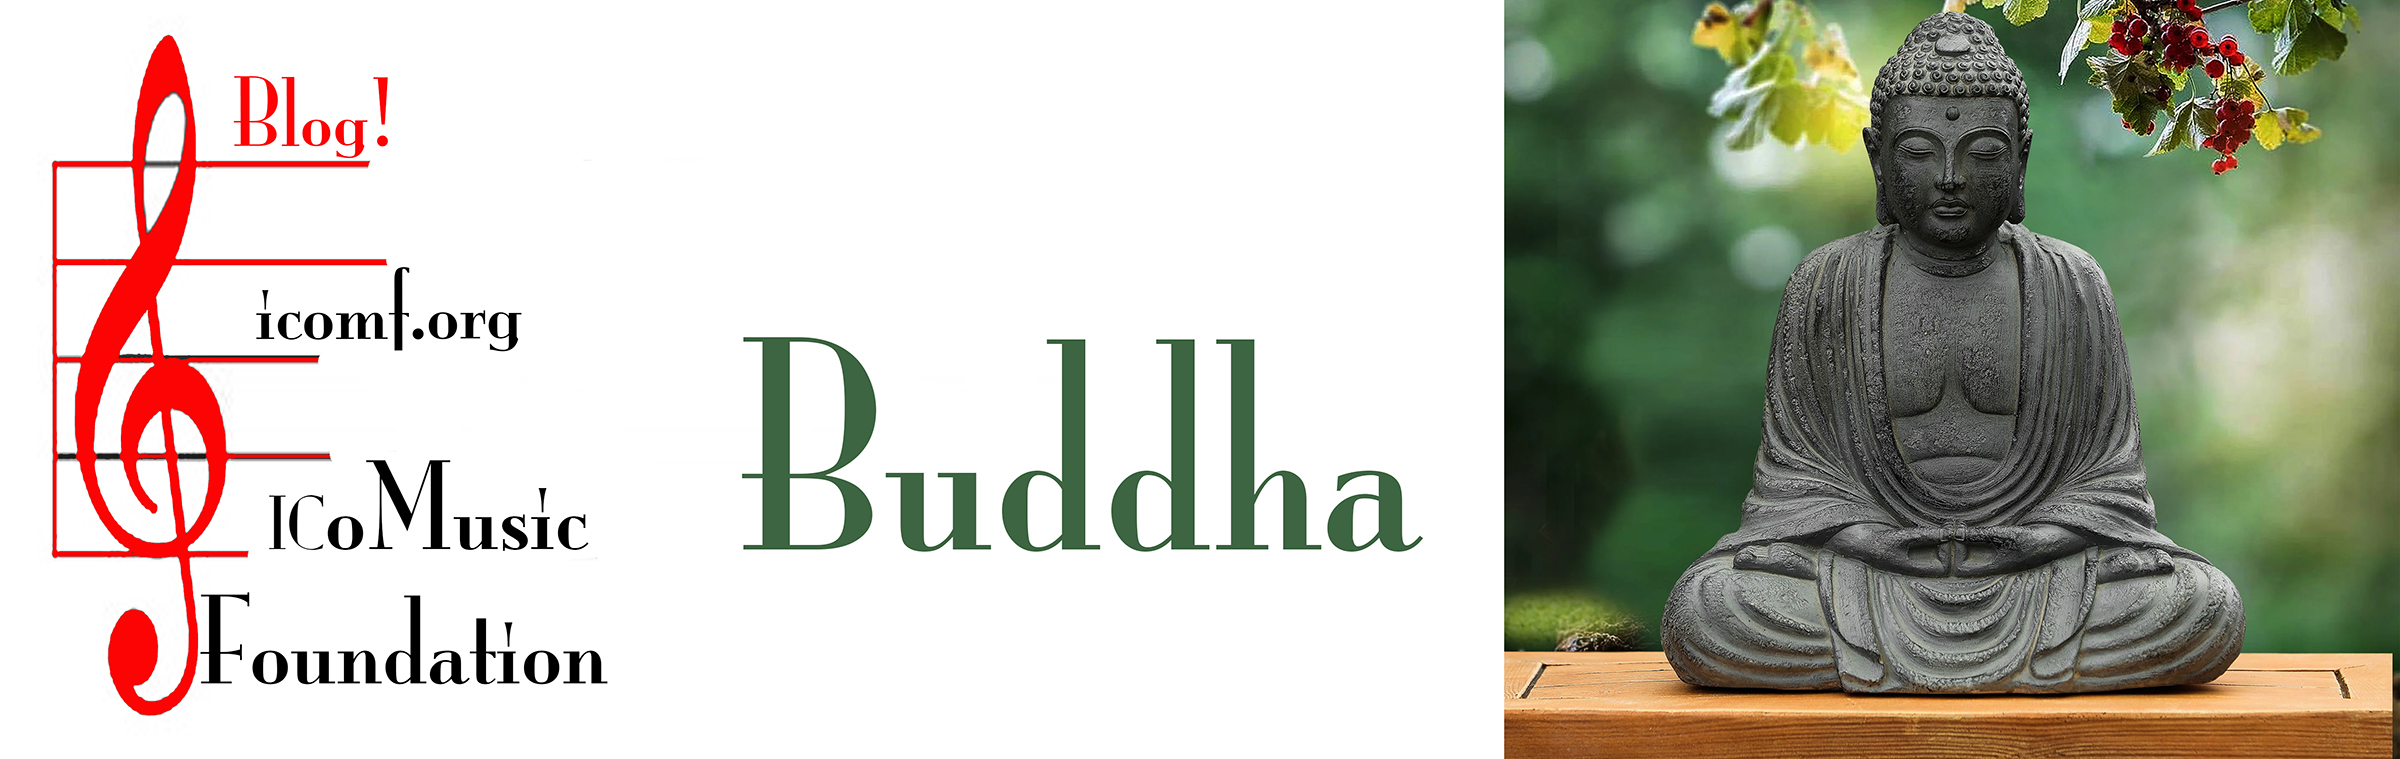 Buddha Blog Banner